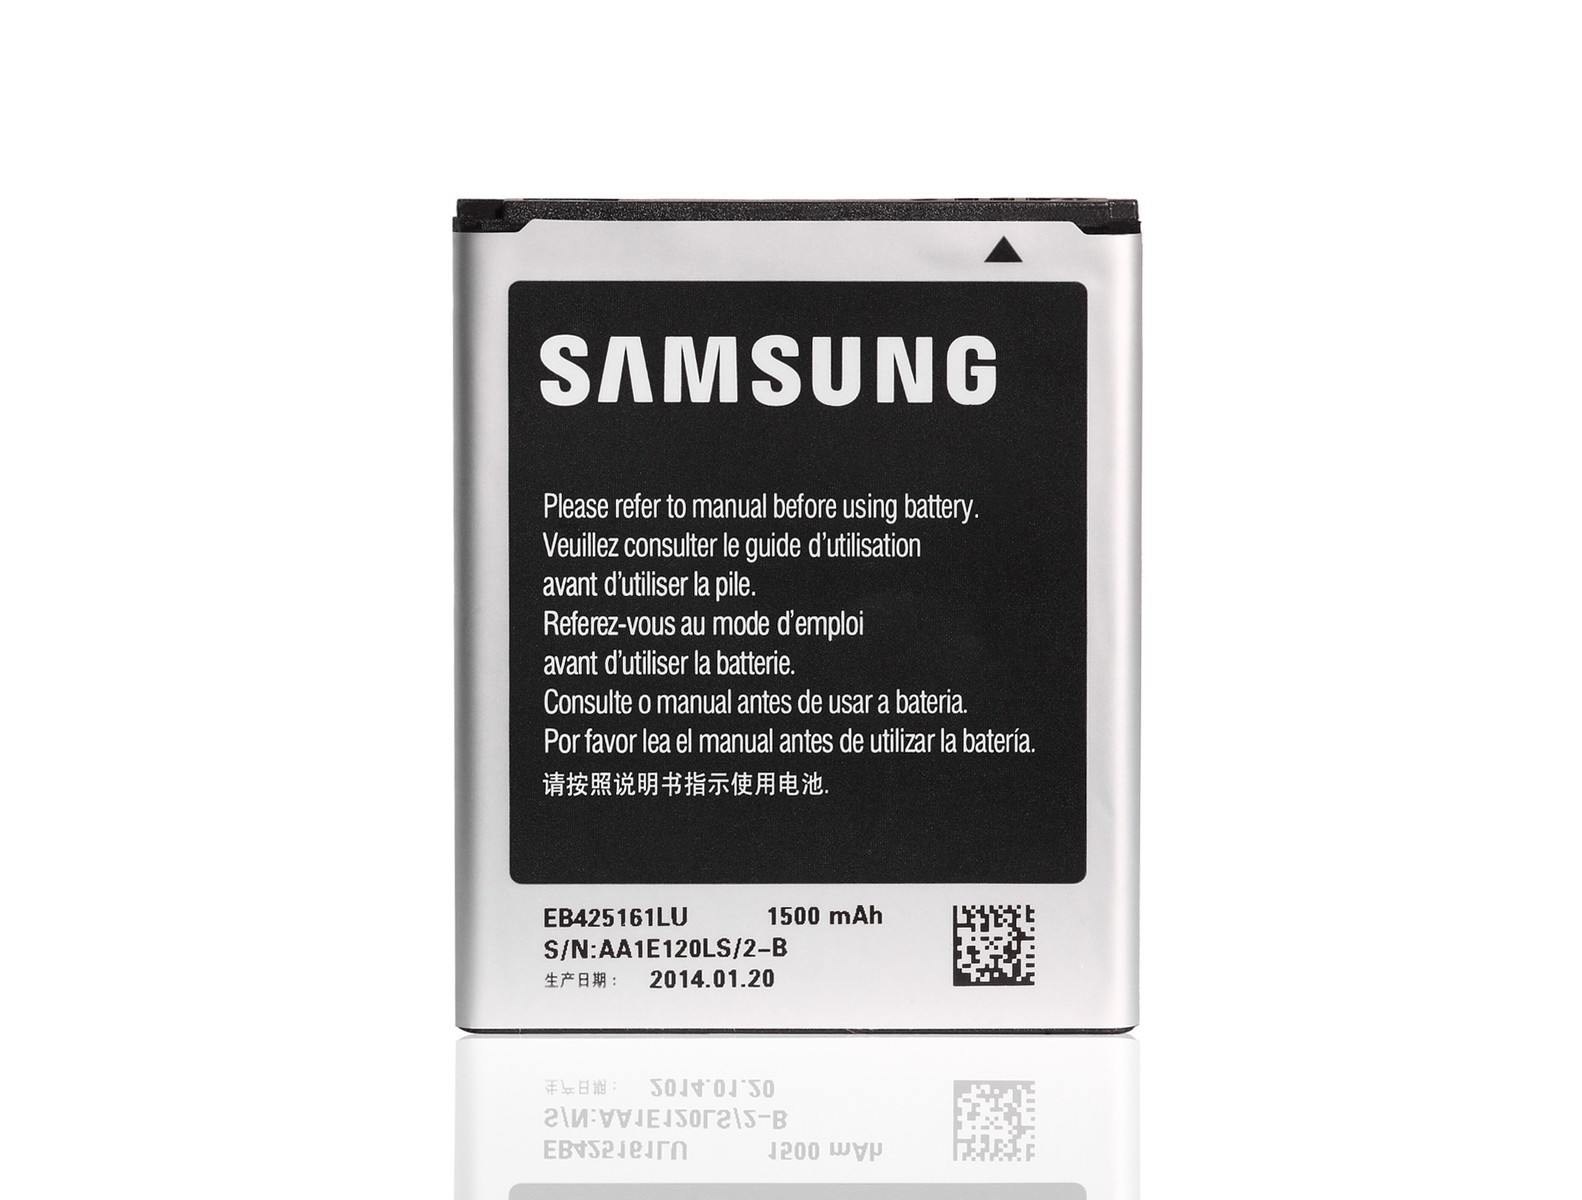 OEM Baterie EB425161LU Li-ion 1500 mAh Samsung i8160 Galaxy Ace 2, S7562 S Duos, S7560 Trend